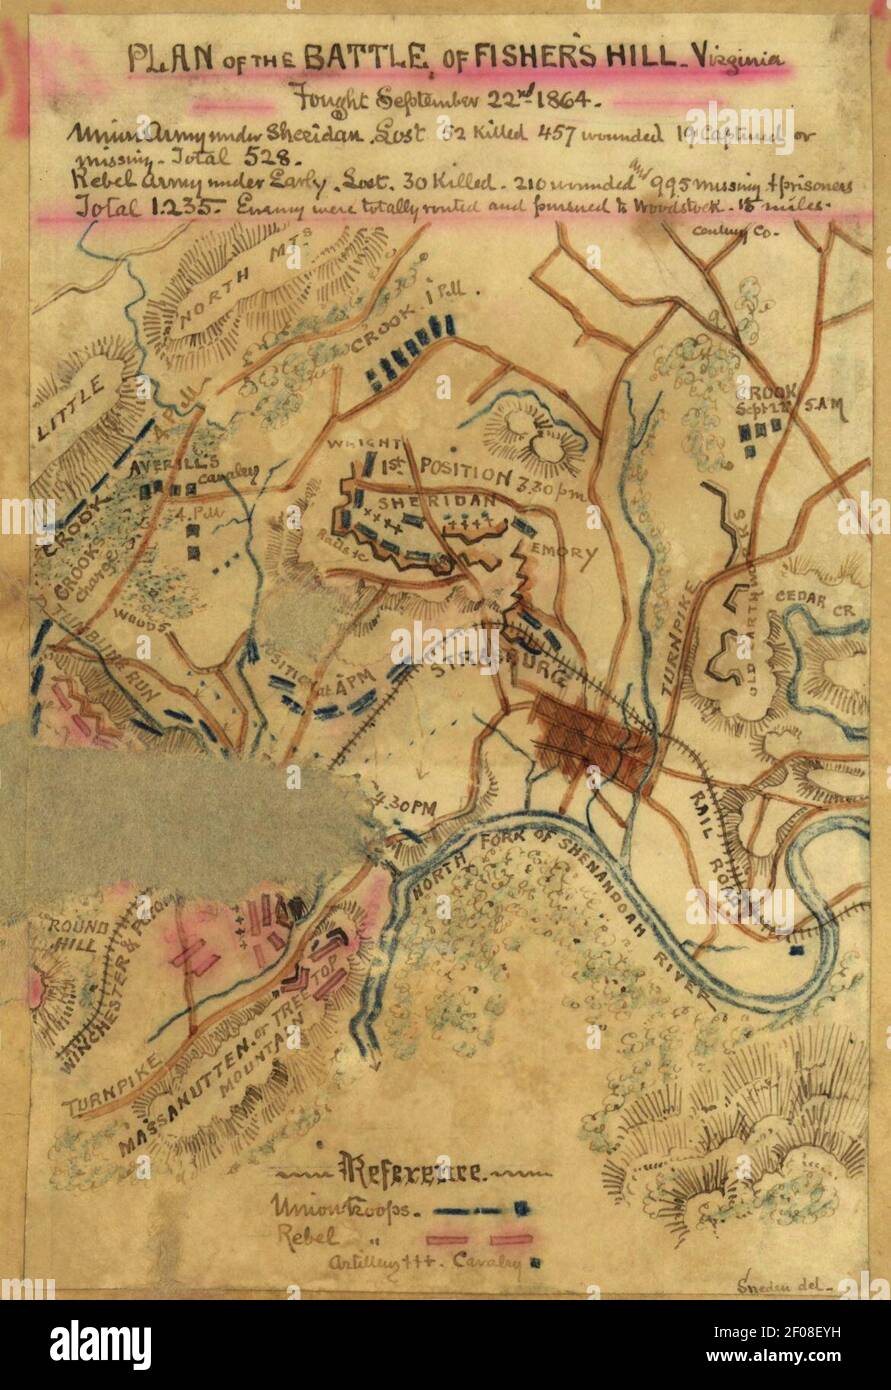 Plan de la batalla de Fisher's Hill, Virginia. Luchó el 22nd de septiembre de 1864. Foto de stock